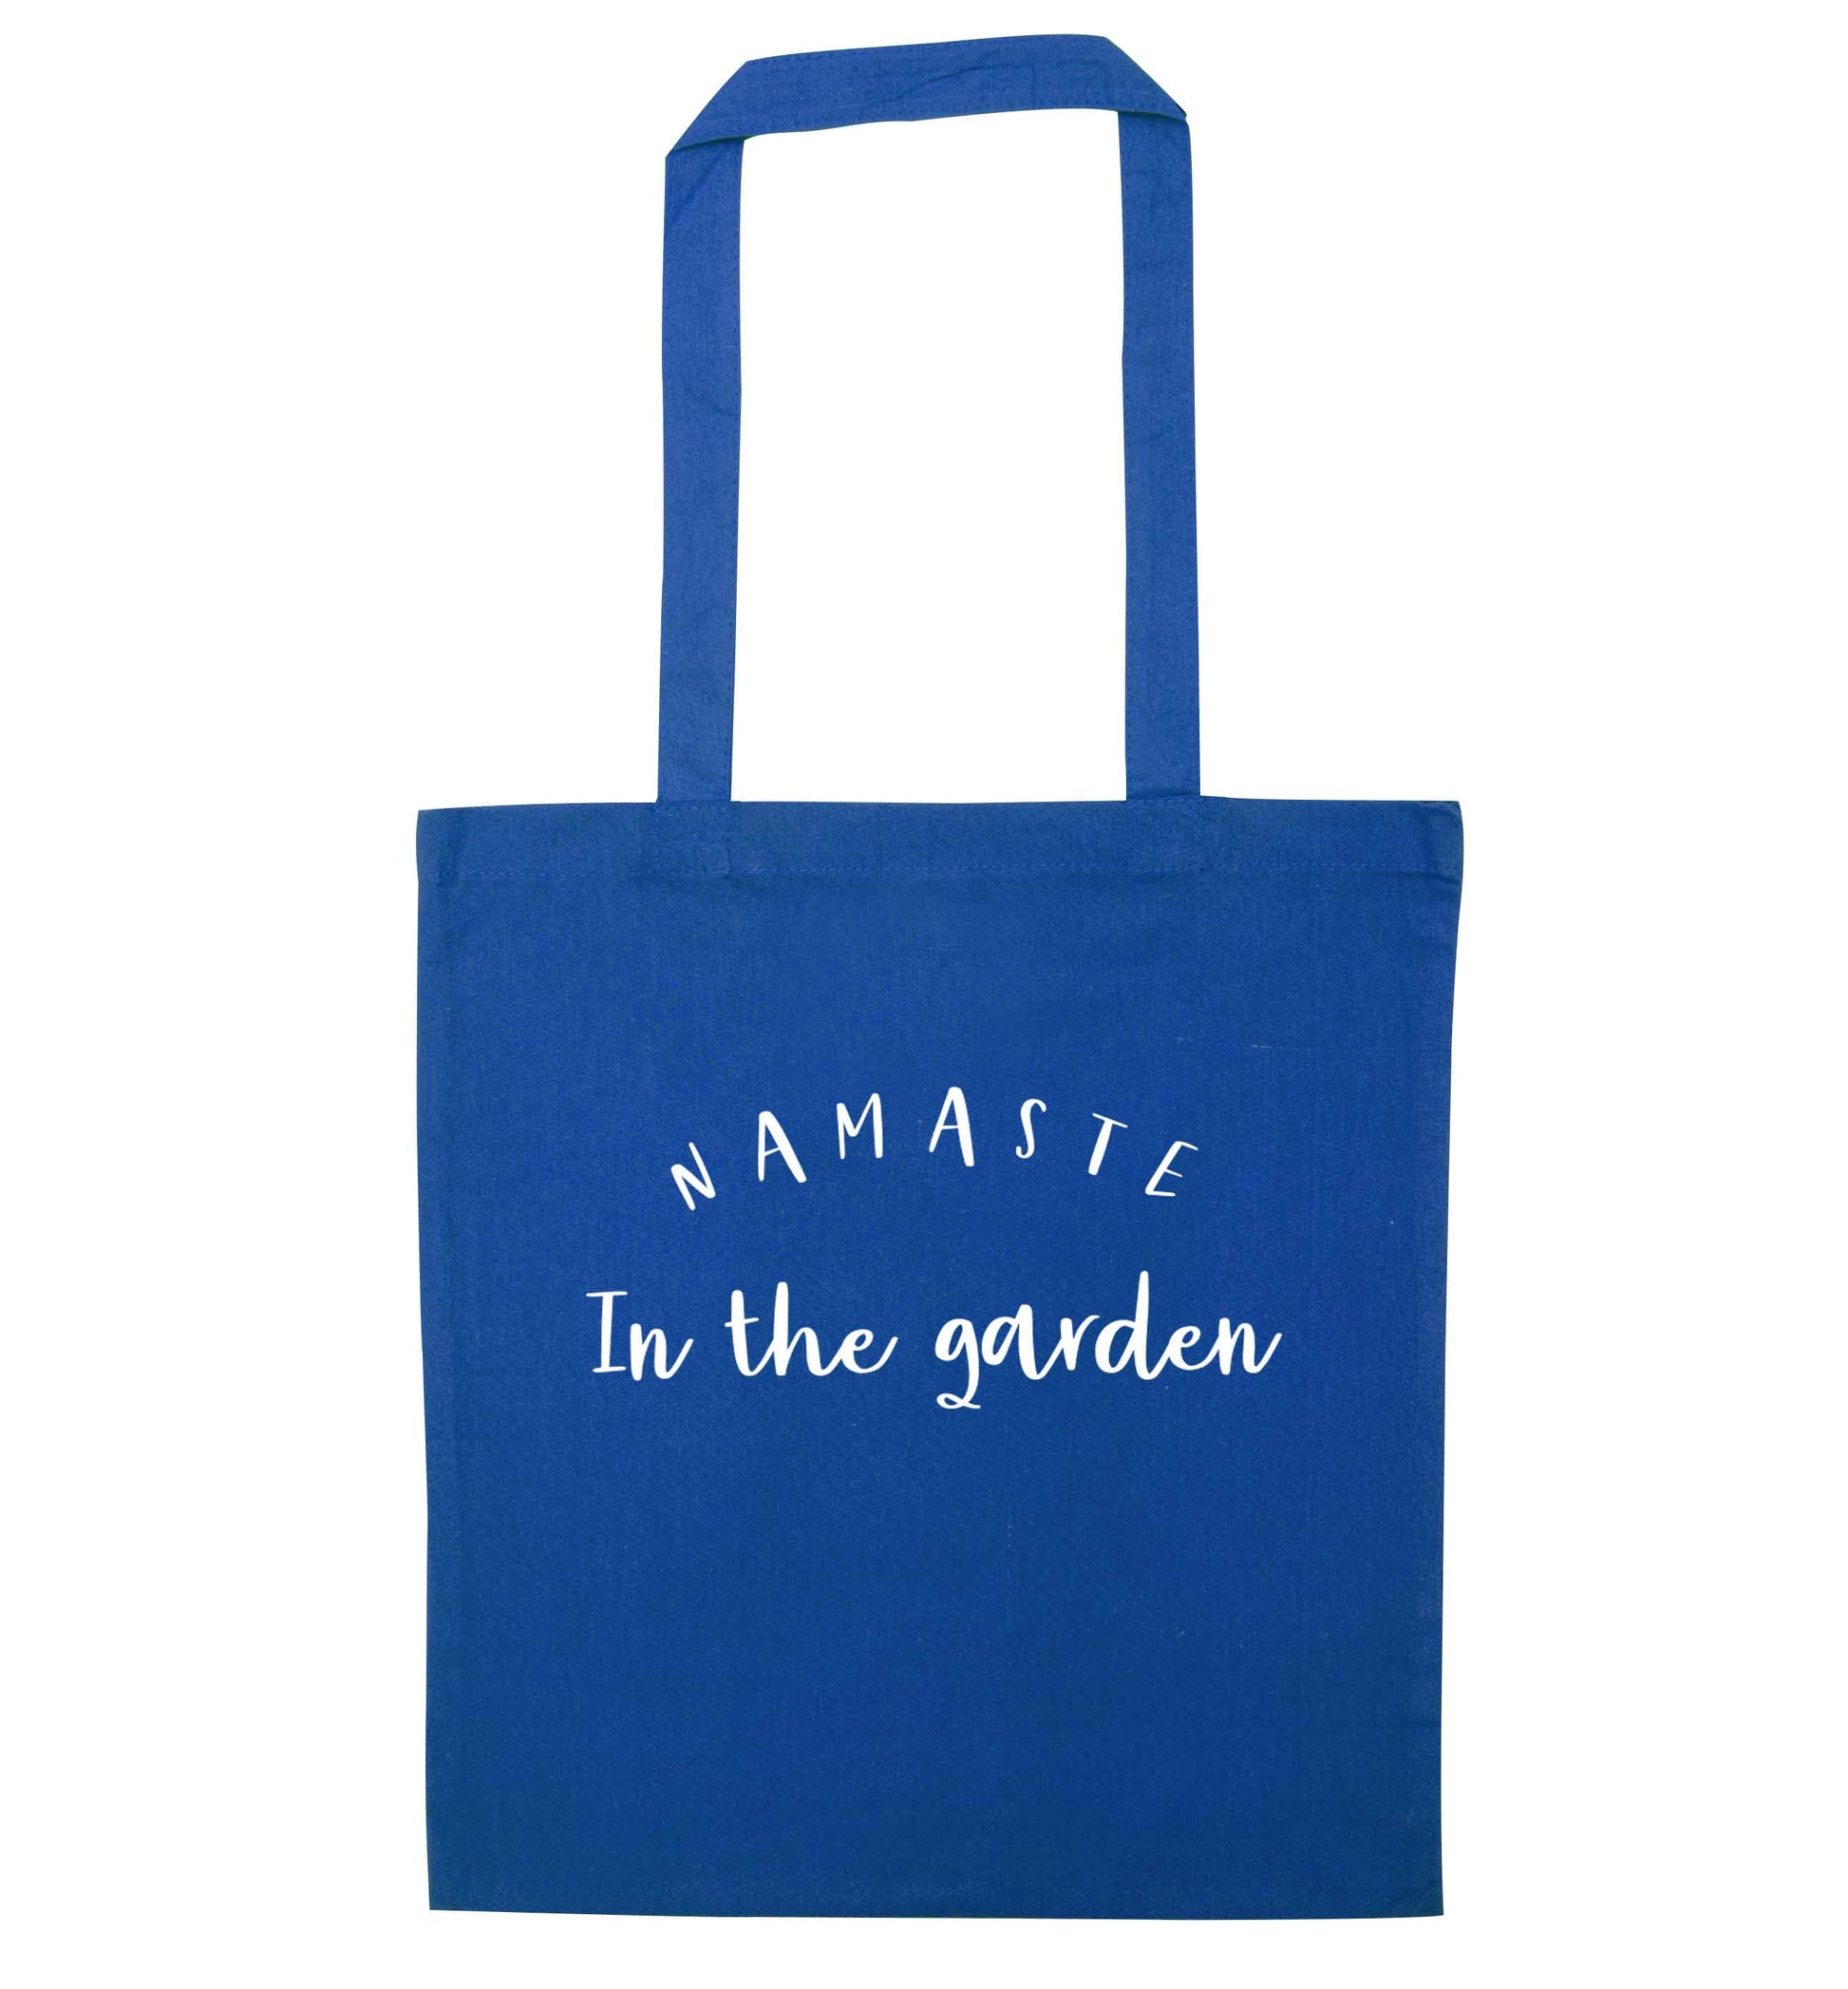 Namaste in the garden blue tote bag